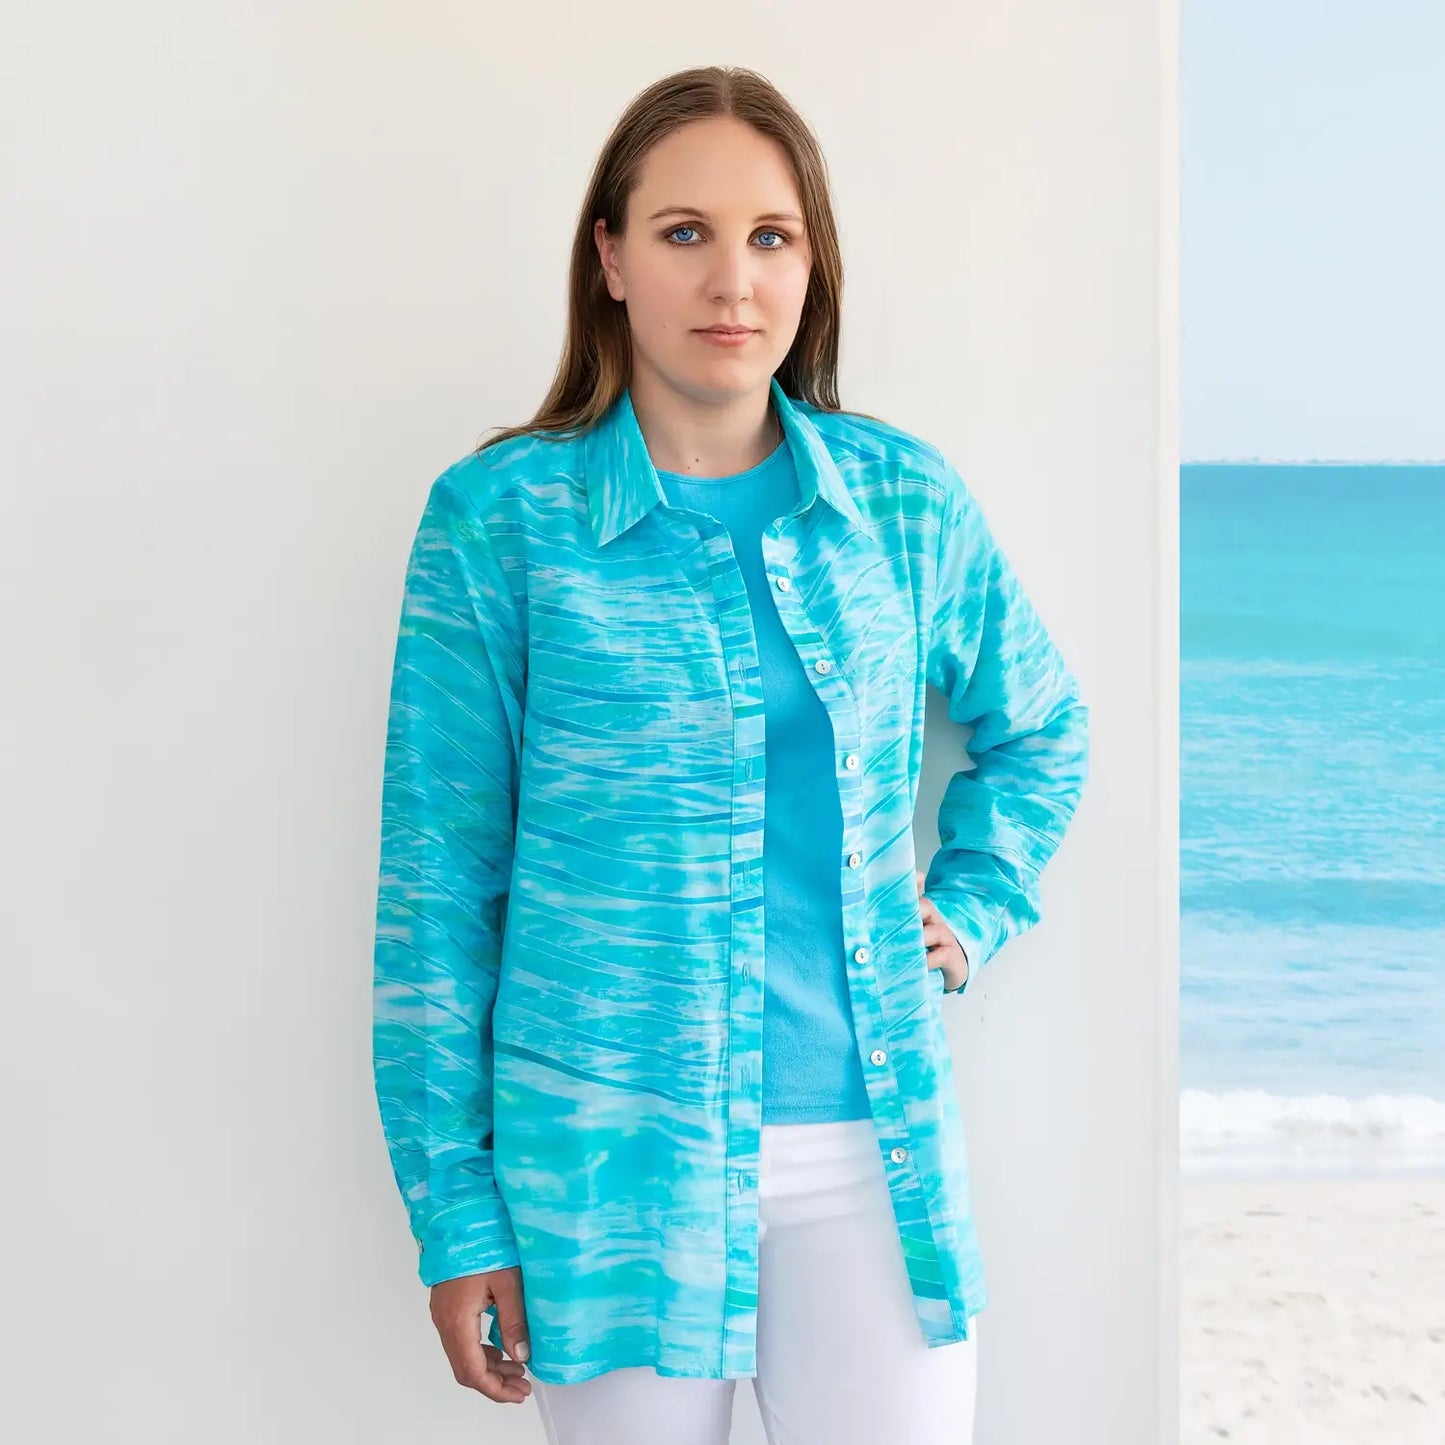 florida silk cotton long sleeve shirt worn open over aqua blue top and white pants